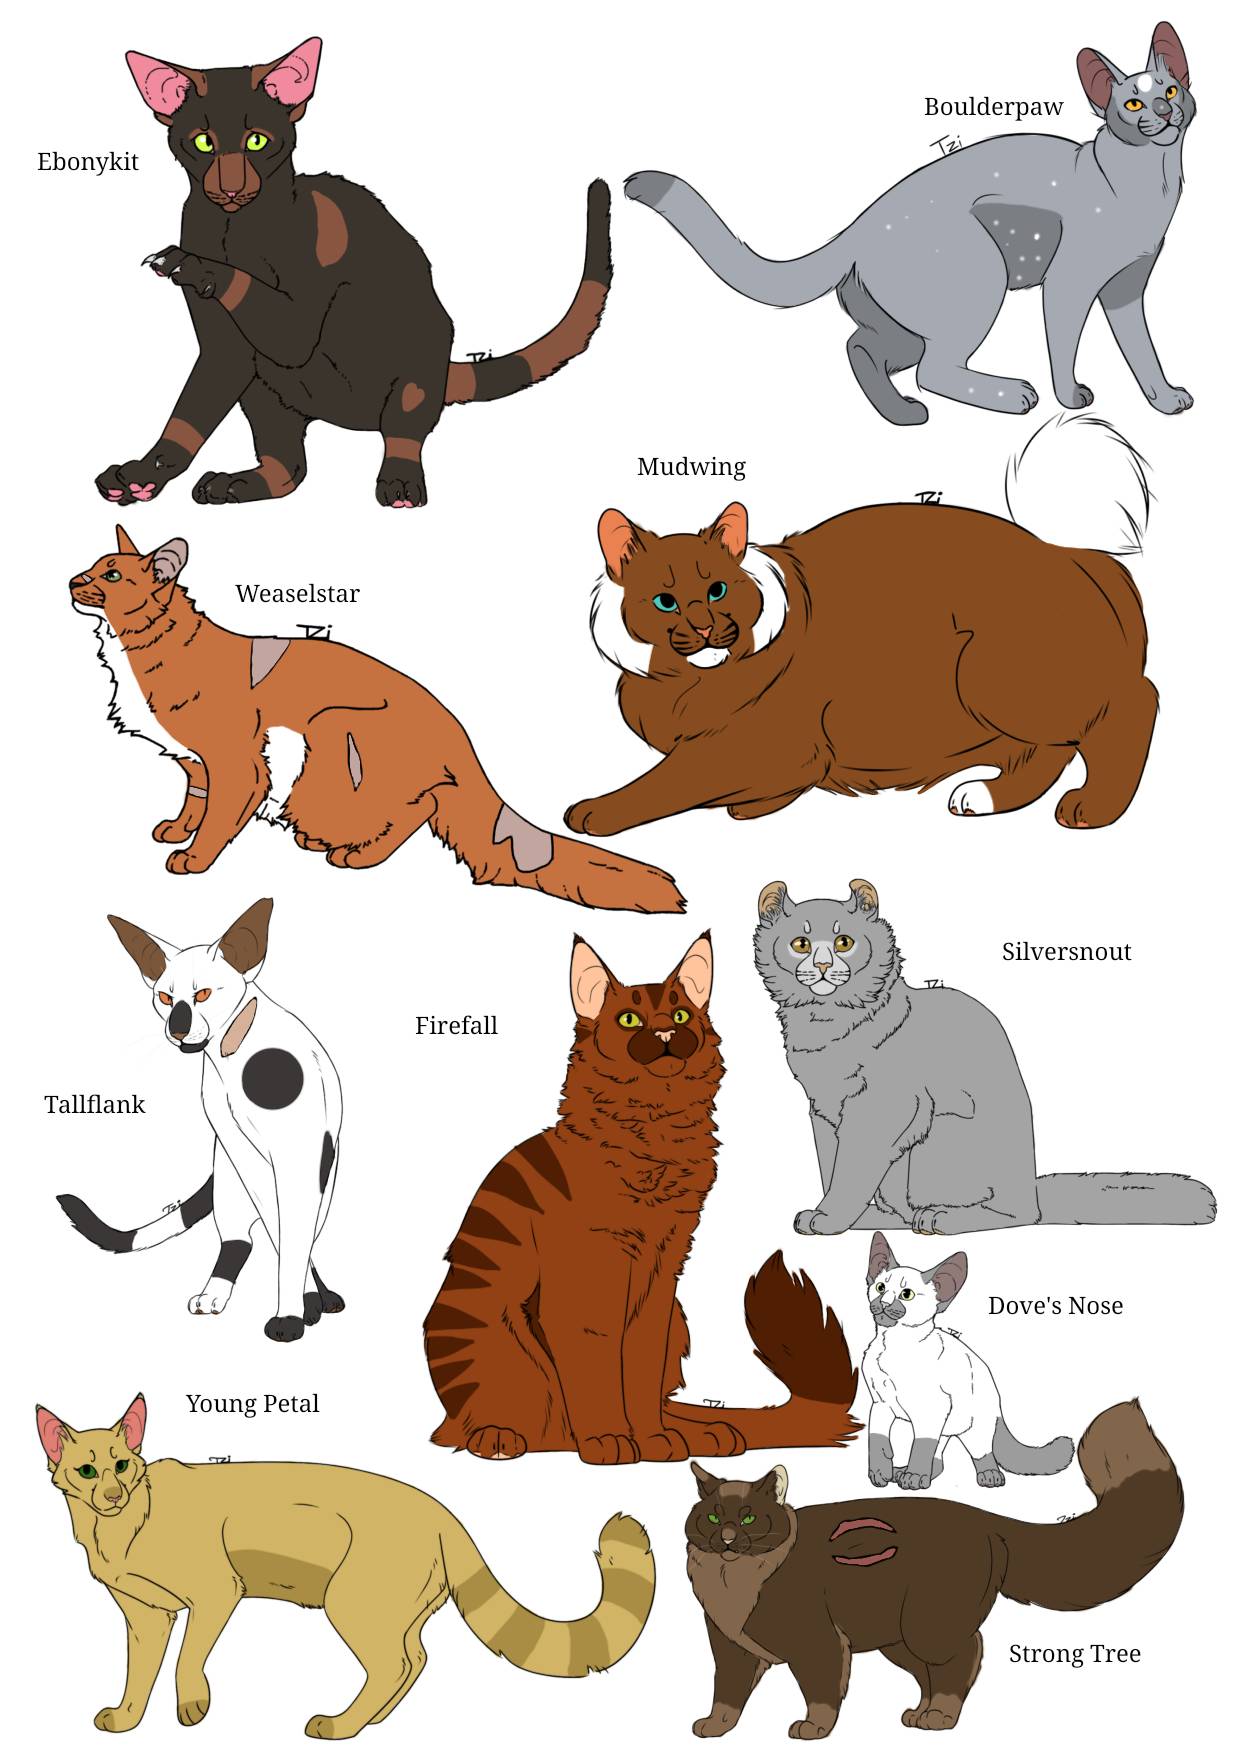 Which Warrior Cat Clan Do You Belong In?